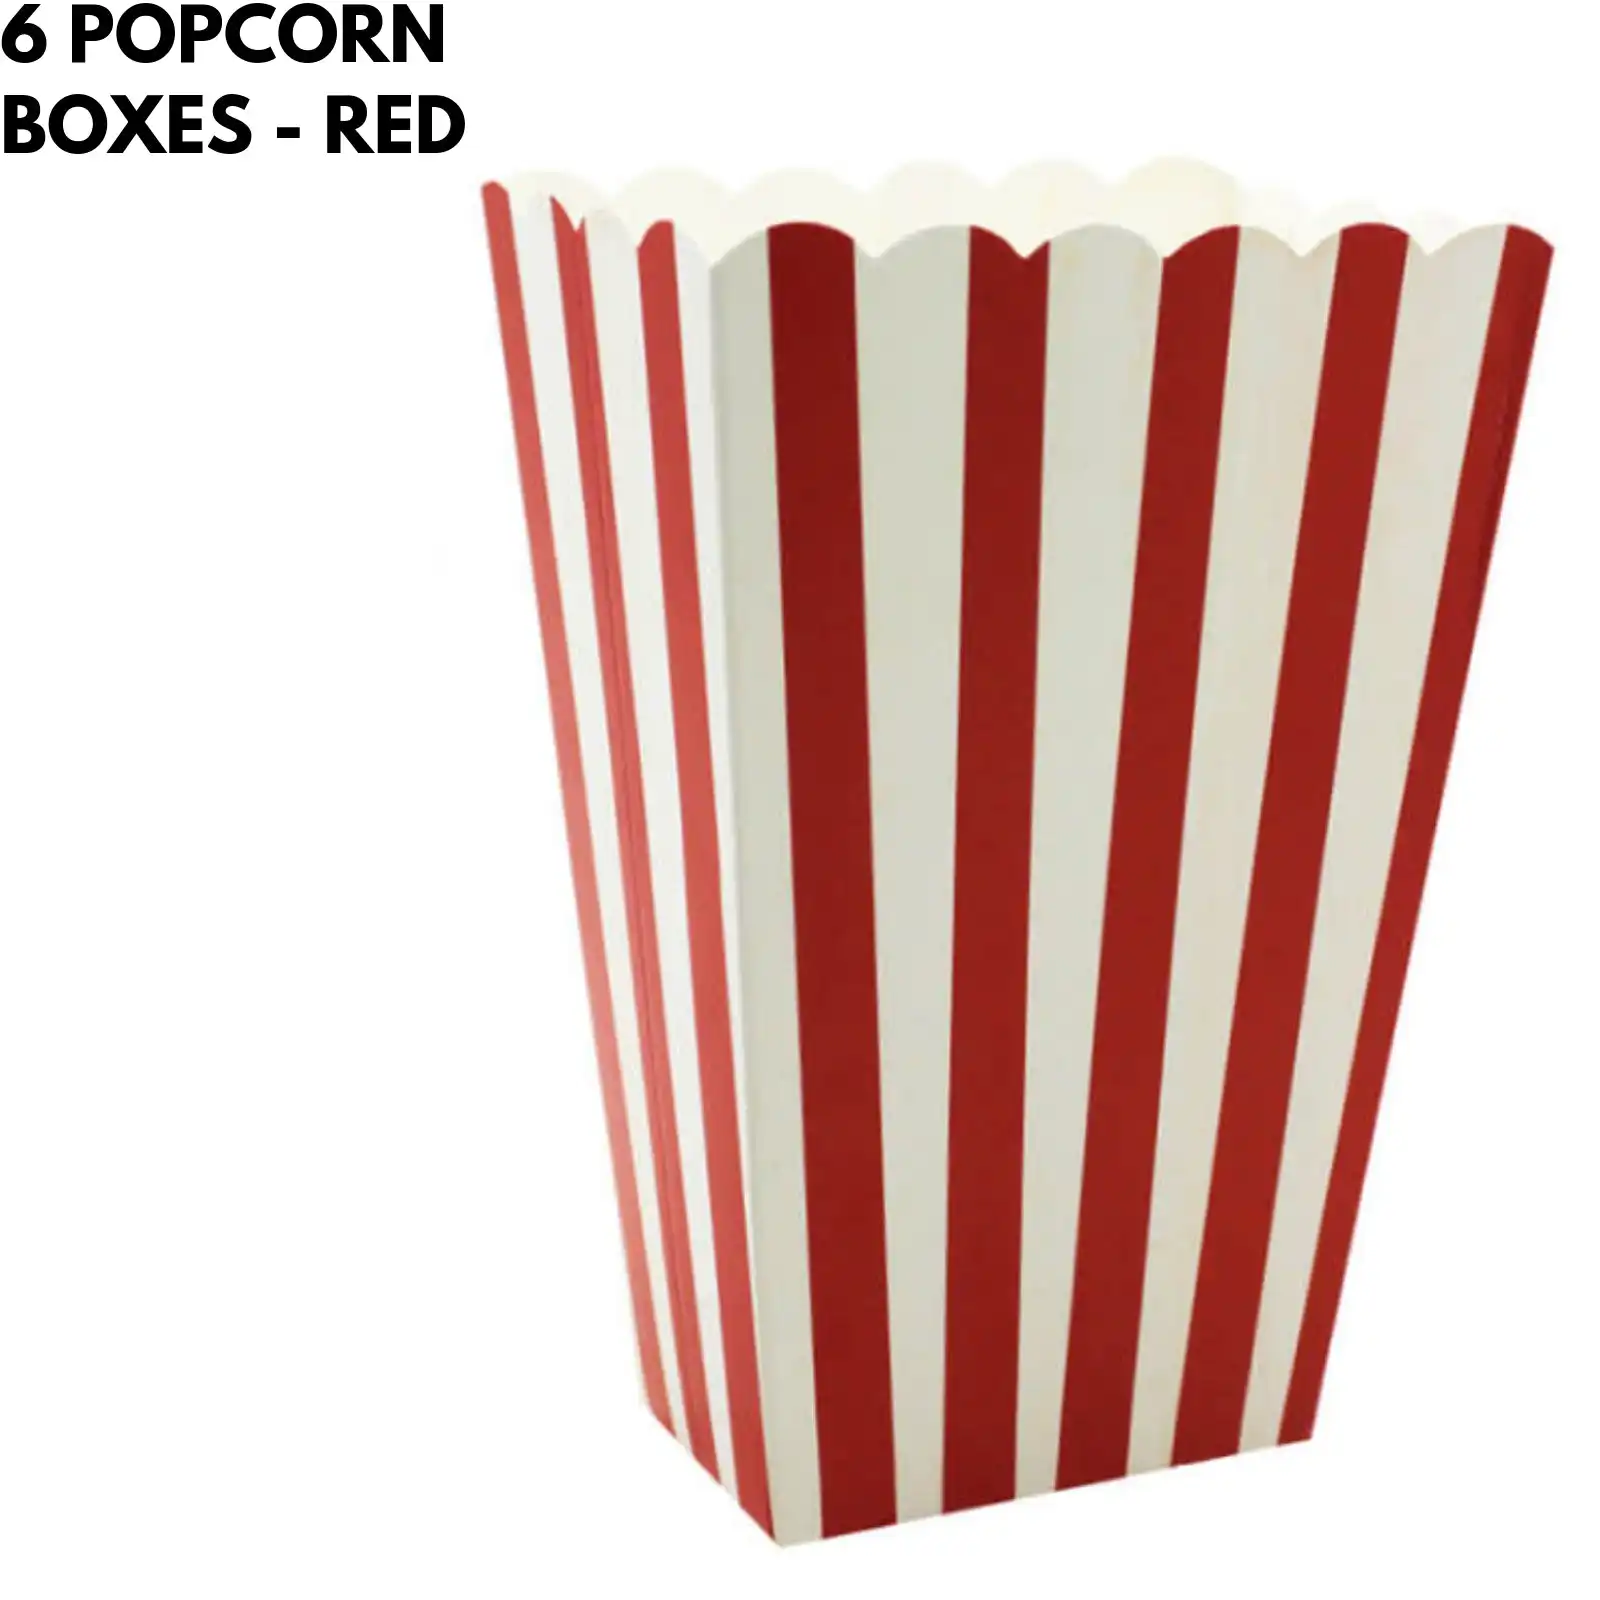 6x POPCORN BOXES Wedding Party Favour Lolly Box Retro Cinema Pop Corn - Red